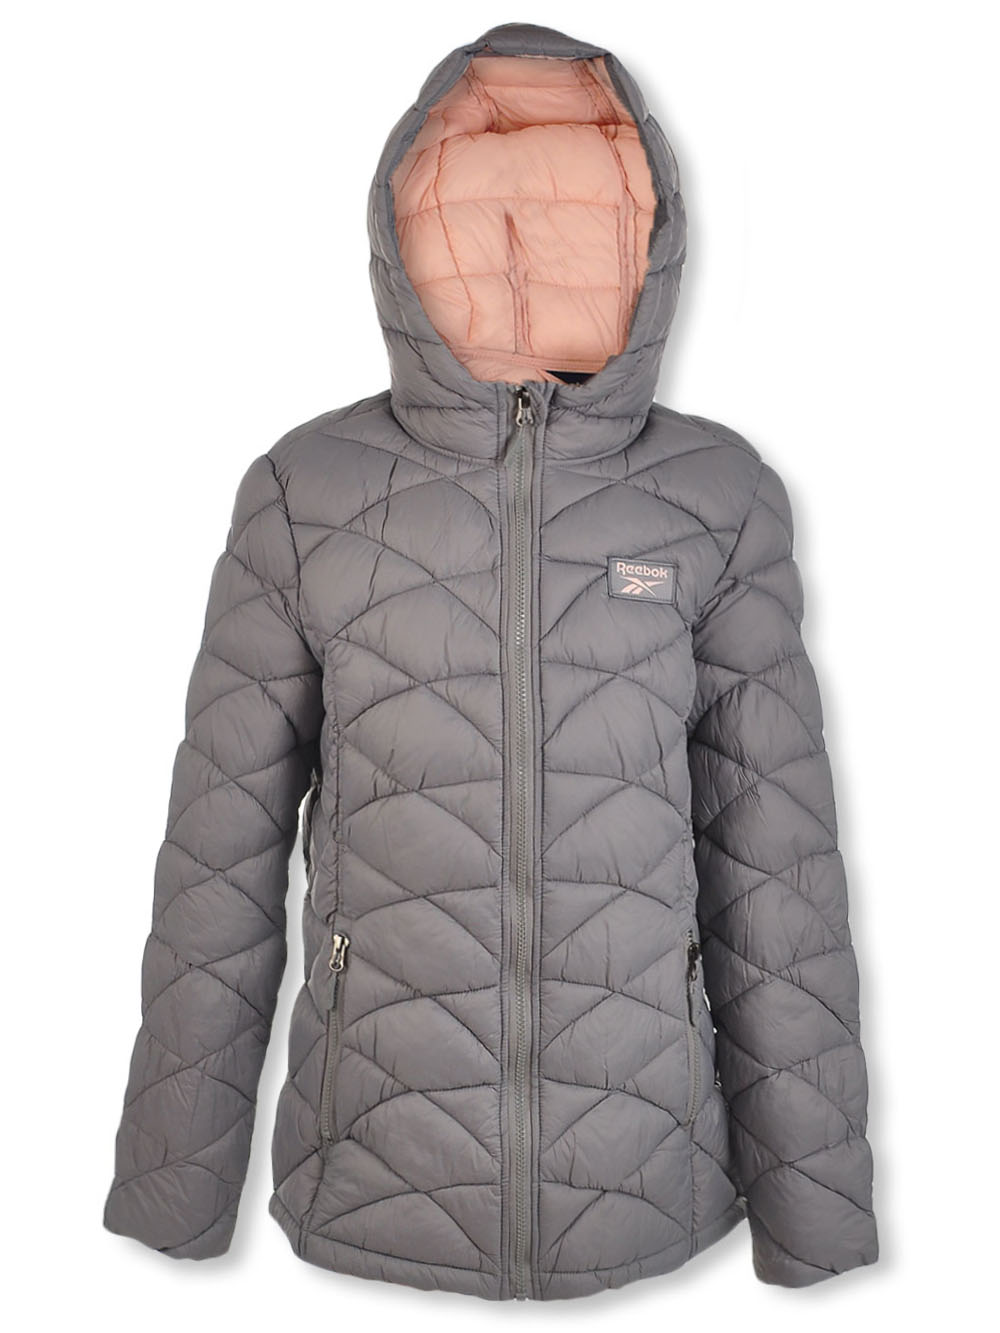 Reebok Girls' Packable Puffer Hooded Jacket - image 3 of 3